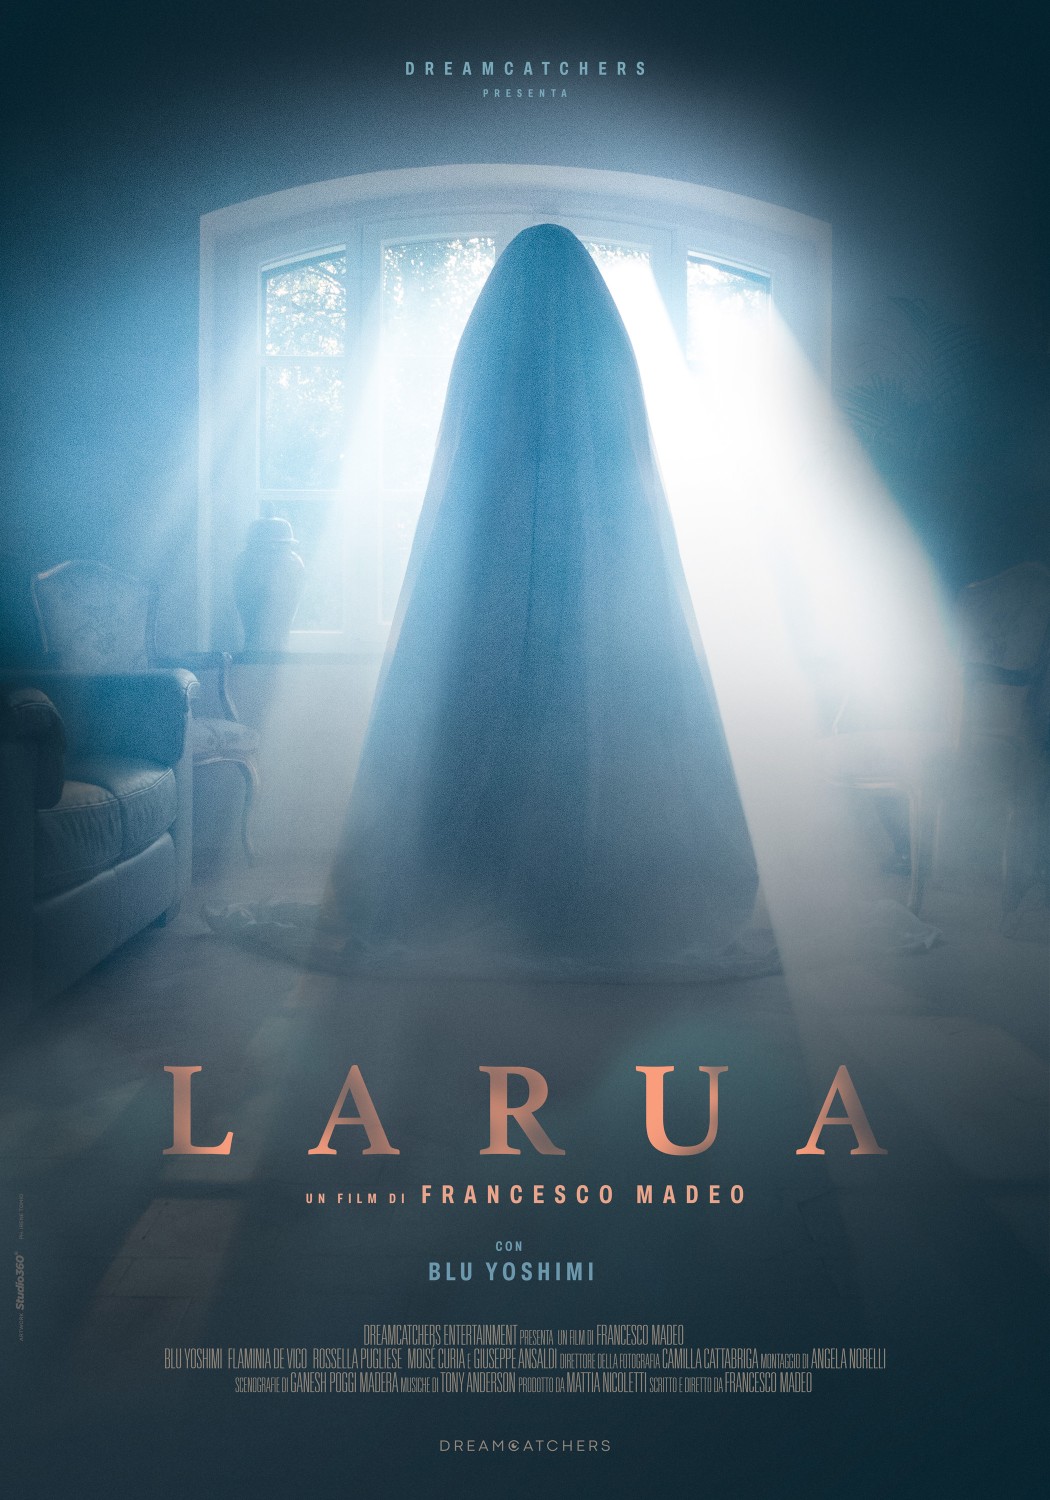 Extra Large Movie Poster Image for Larua